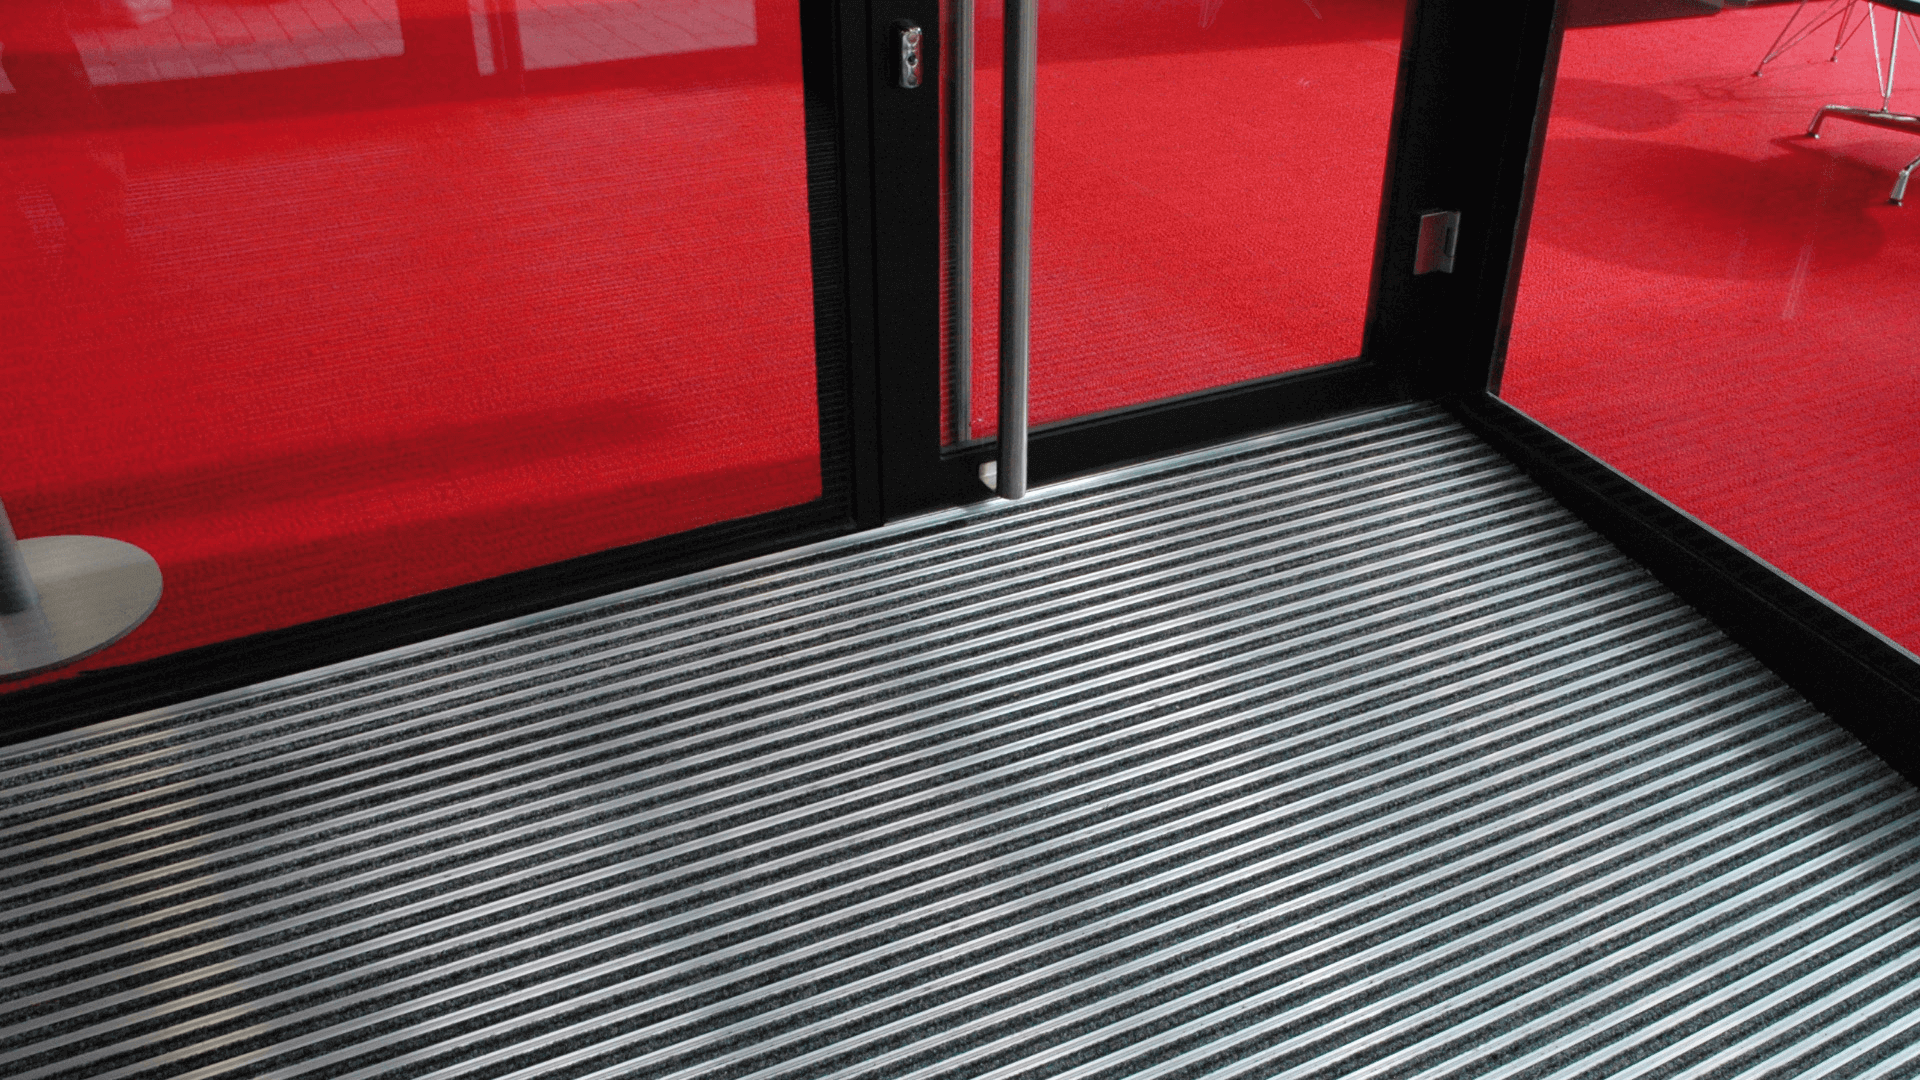 Entrance floor matting